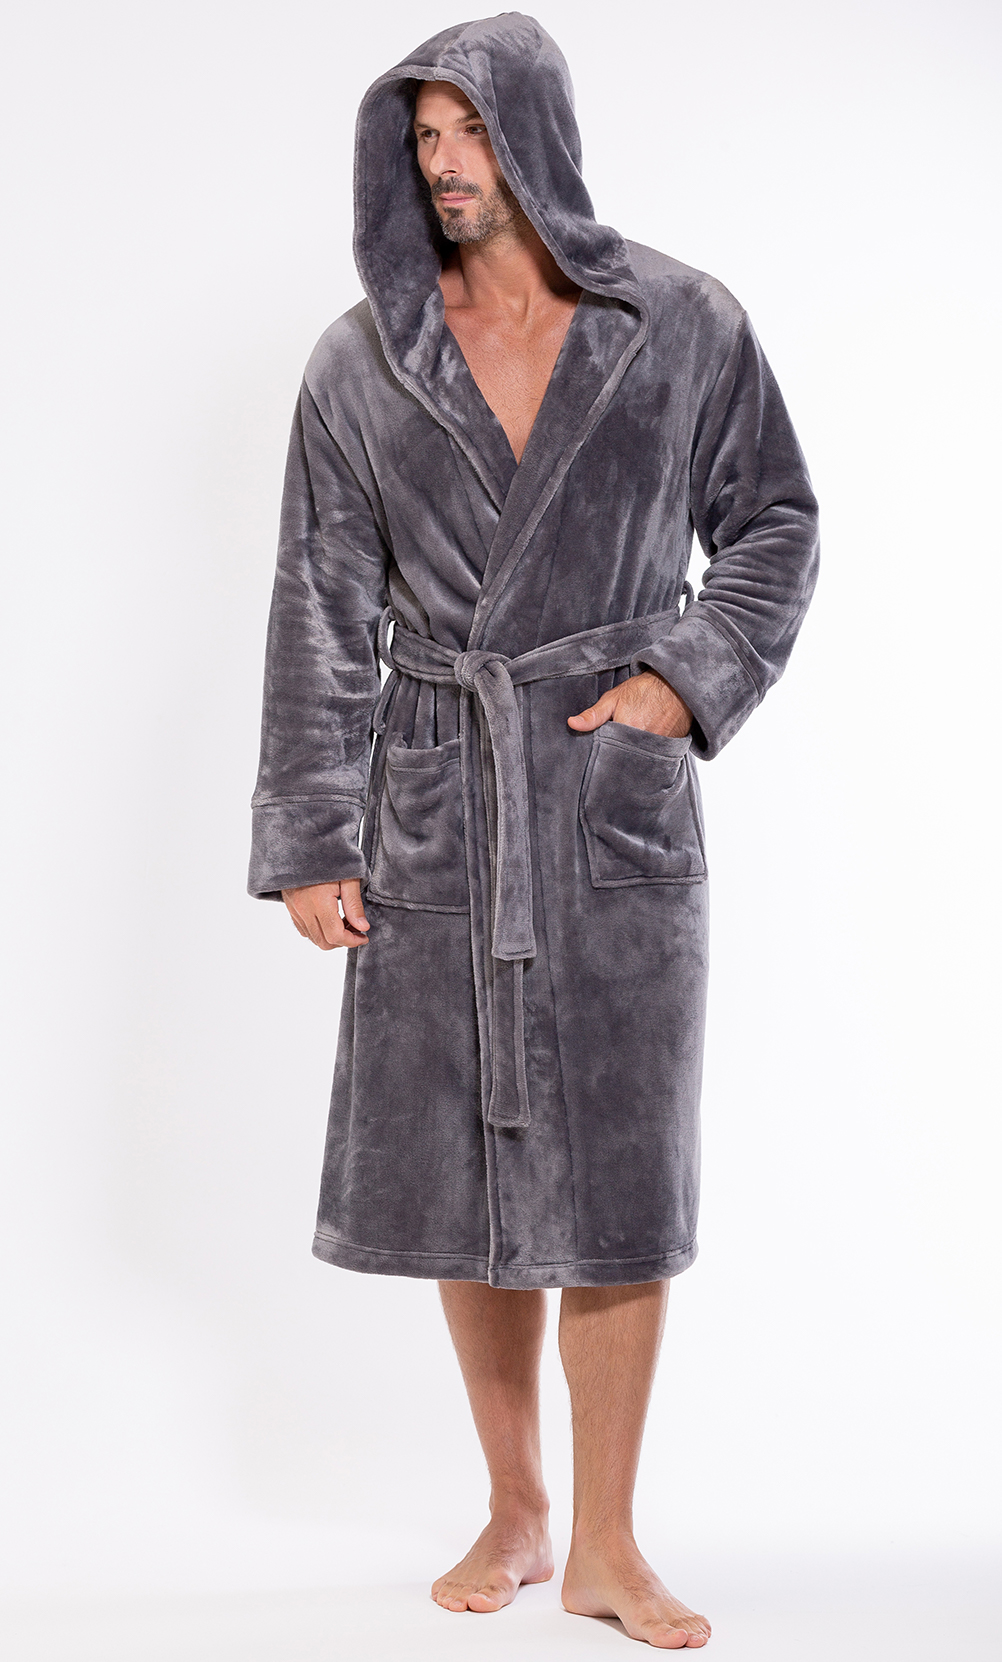 http://robemart.com/images/detailed/8/Men's_Gray_Plush_Soft_Warm_Fleece_Bathrobe_with_Hood_Comfy_Men's_Robe_.jpg